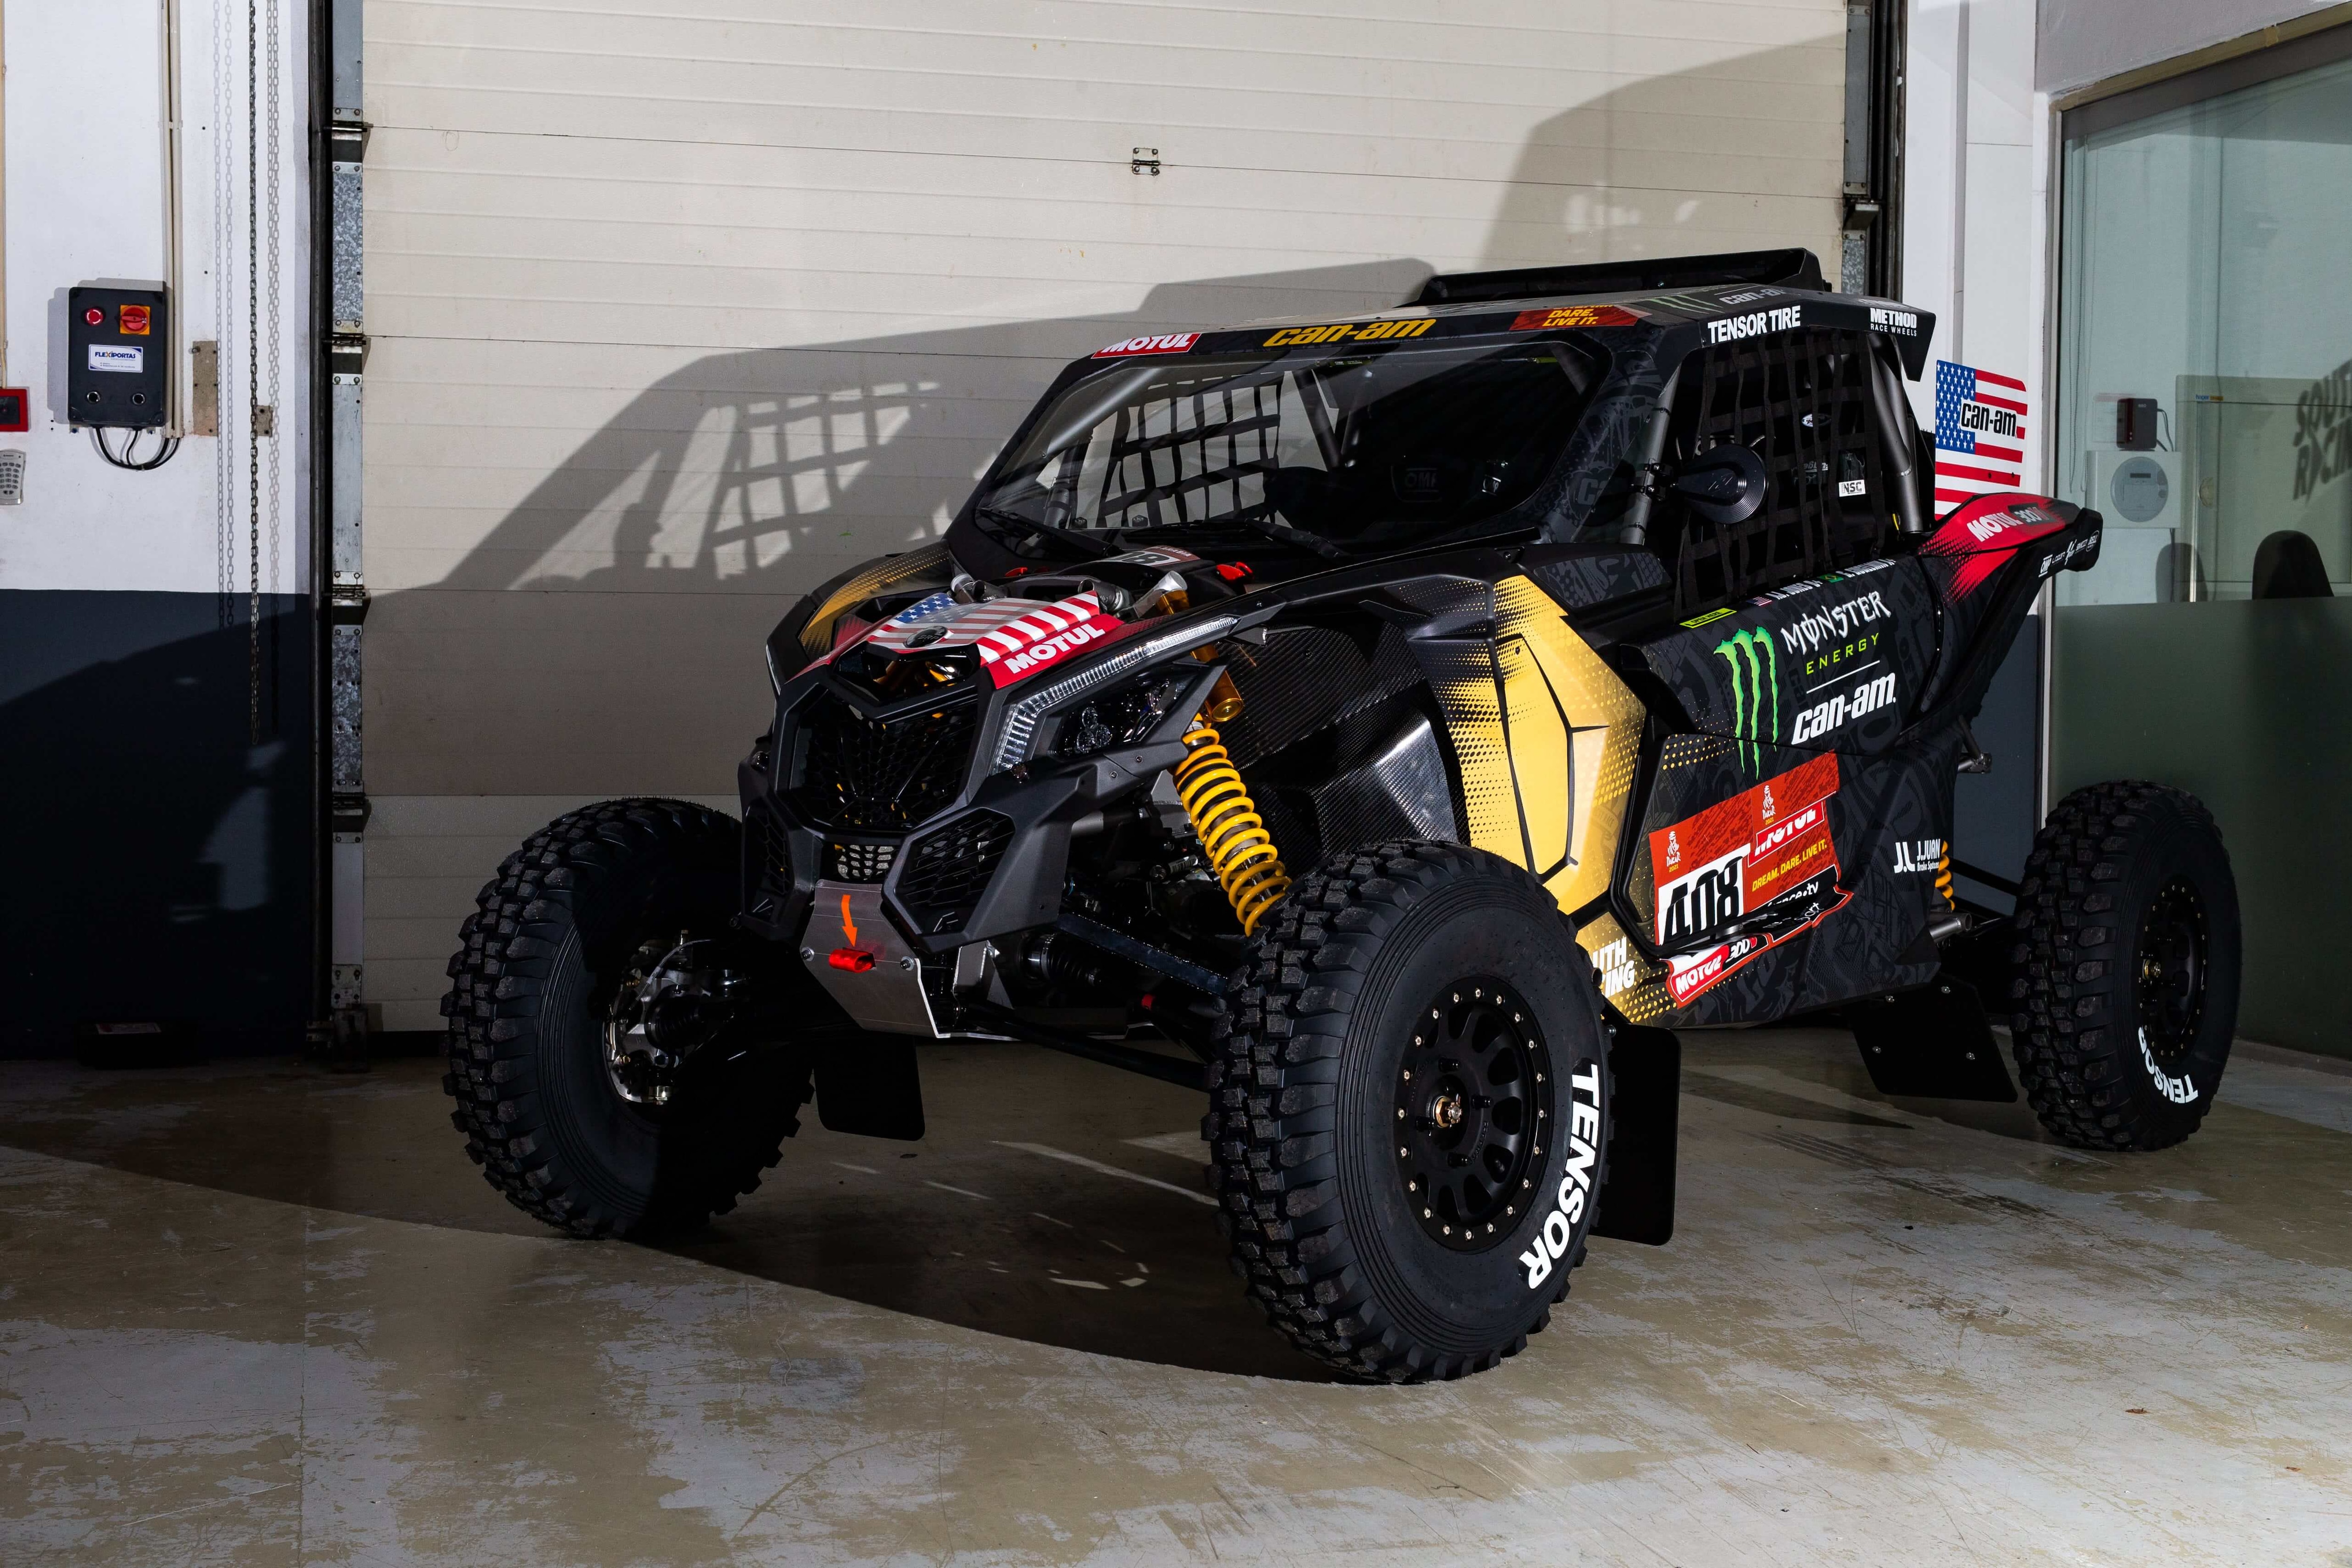 Le Can-Am Maverick personnalisé d’Austin Jones au Rallye Dakar 2021